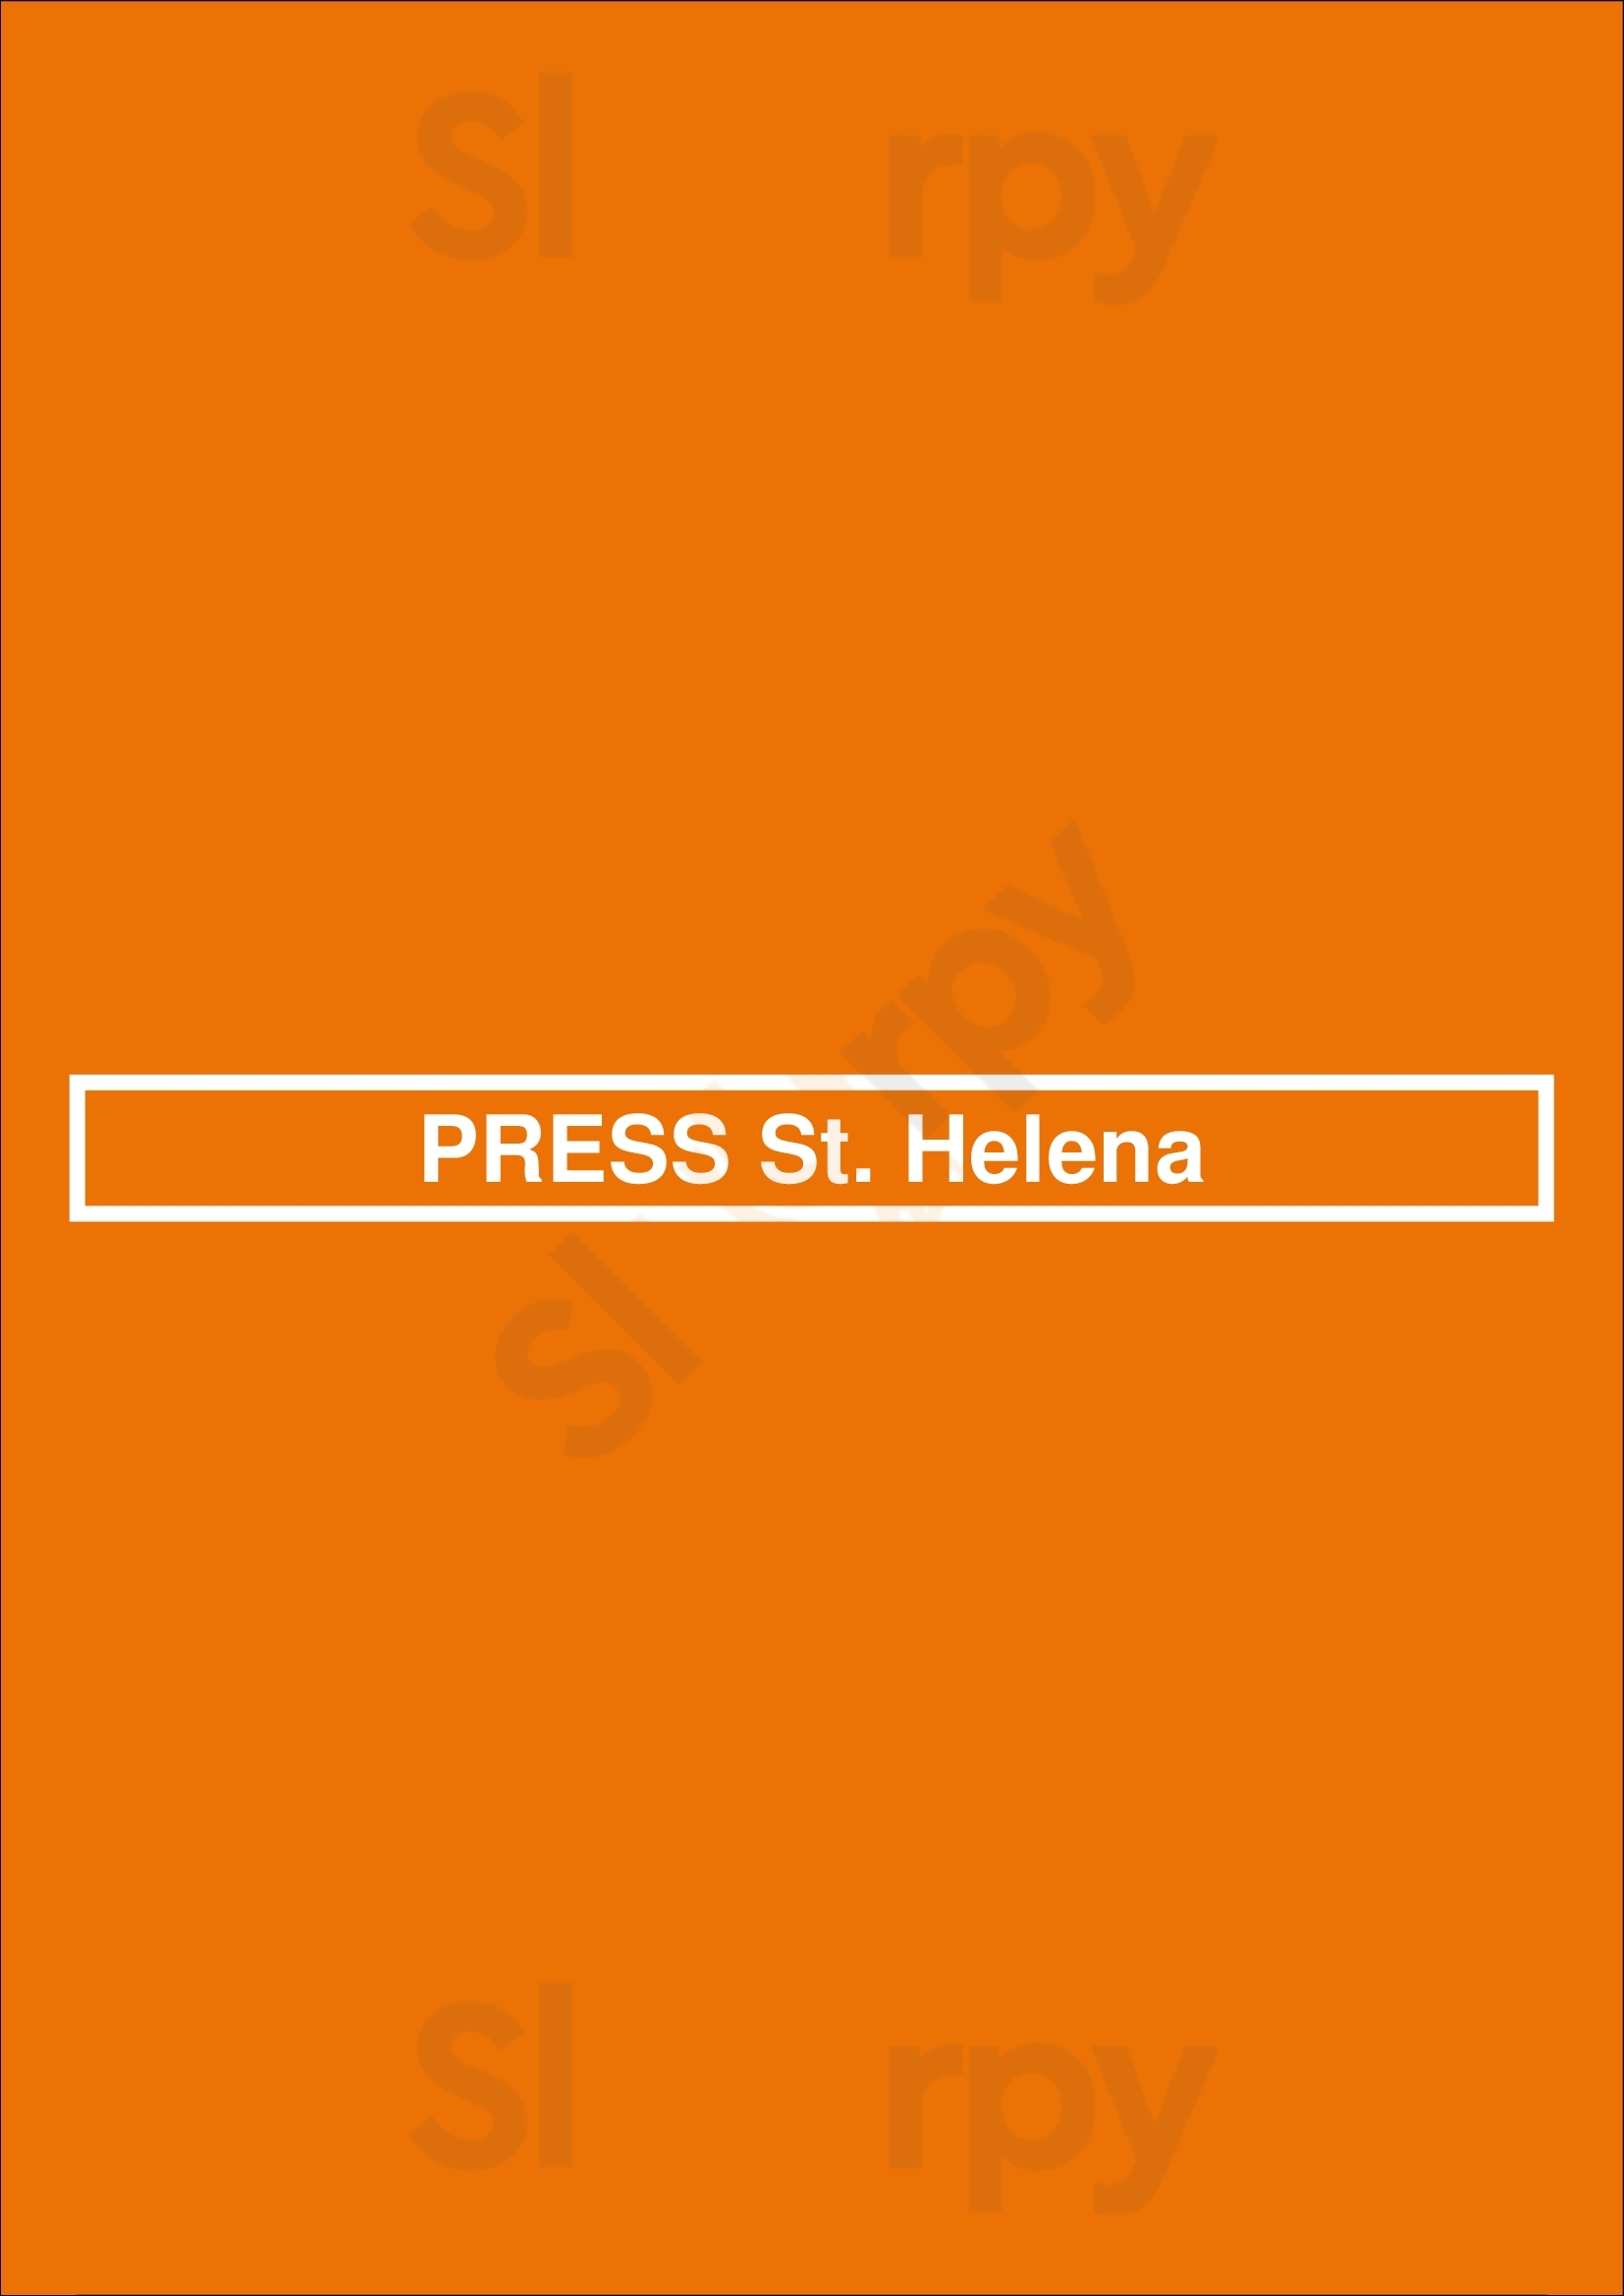 Press Restaurant St. Helena Menu - 1